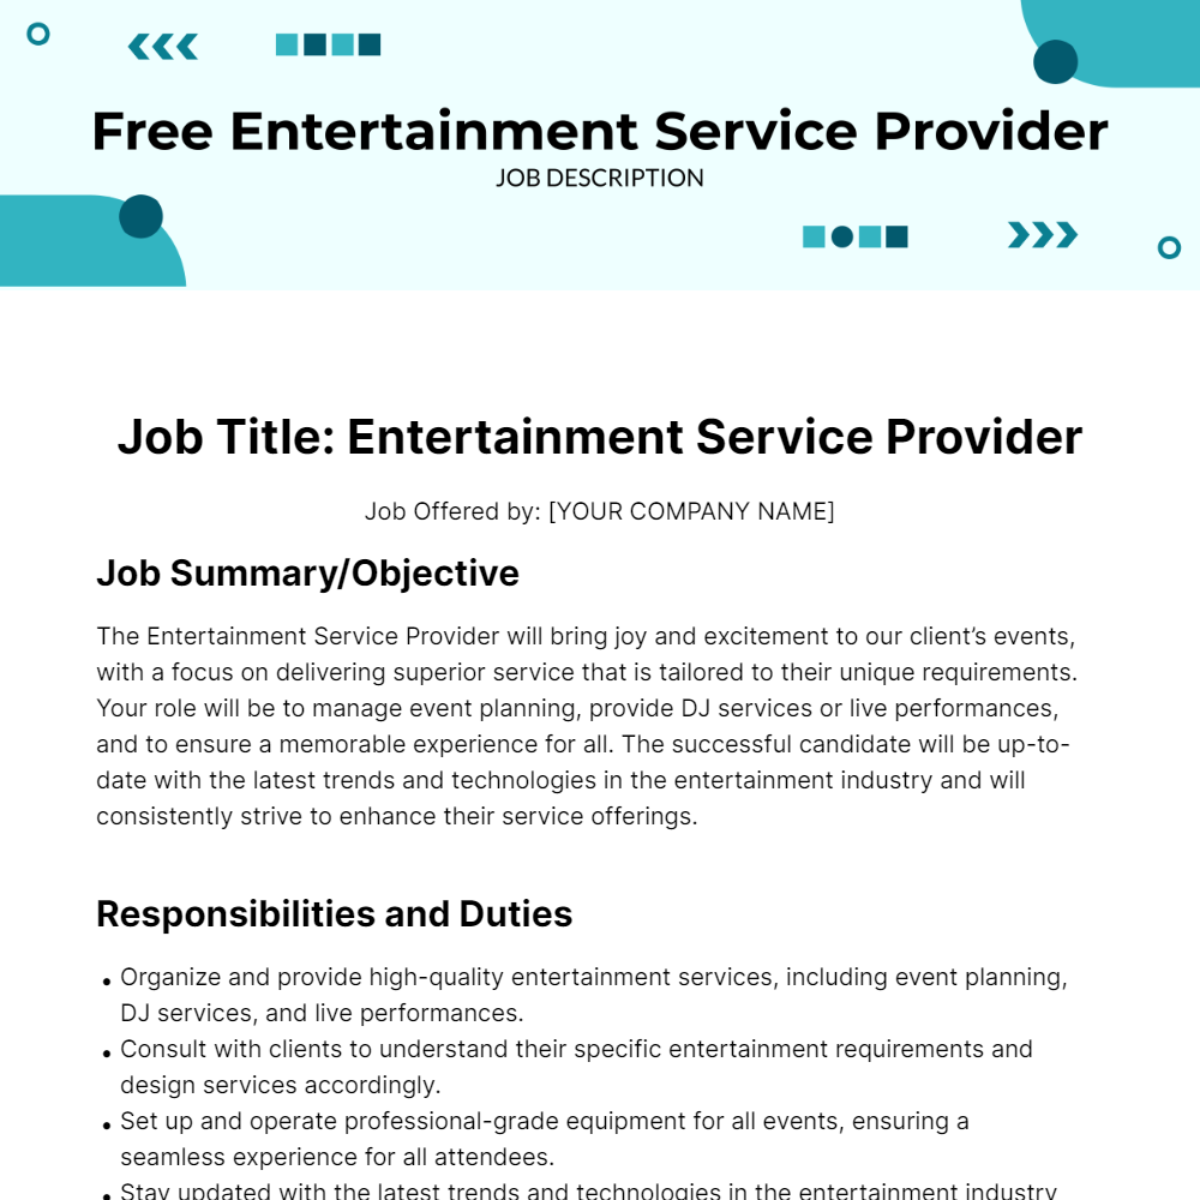 Free Entertainment Service Provider Job Description Template